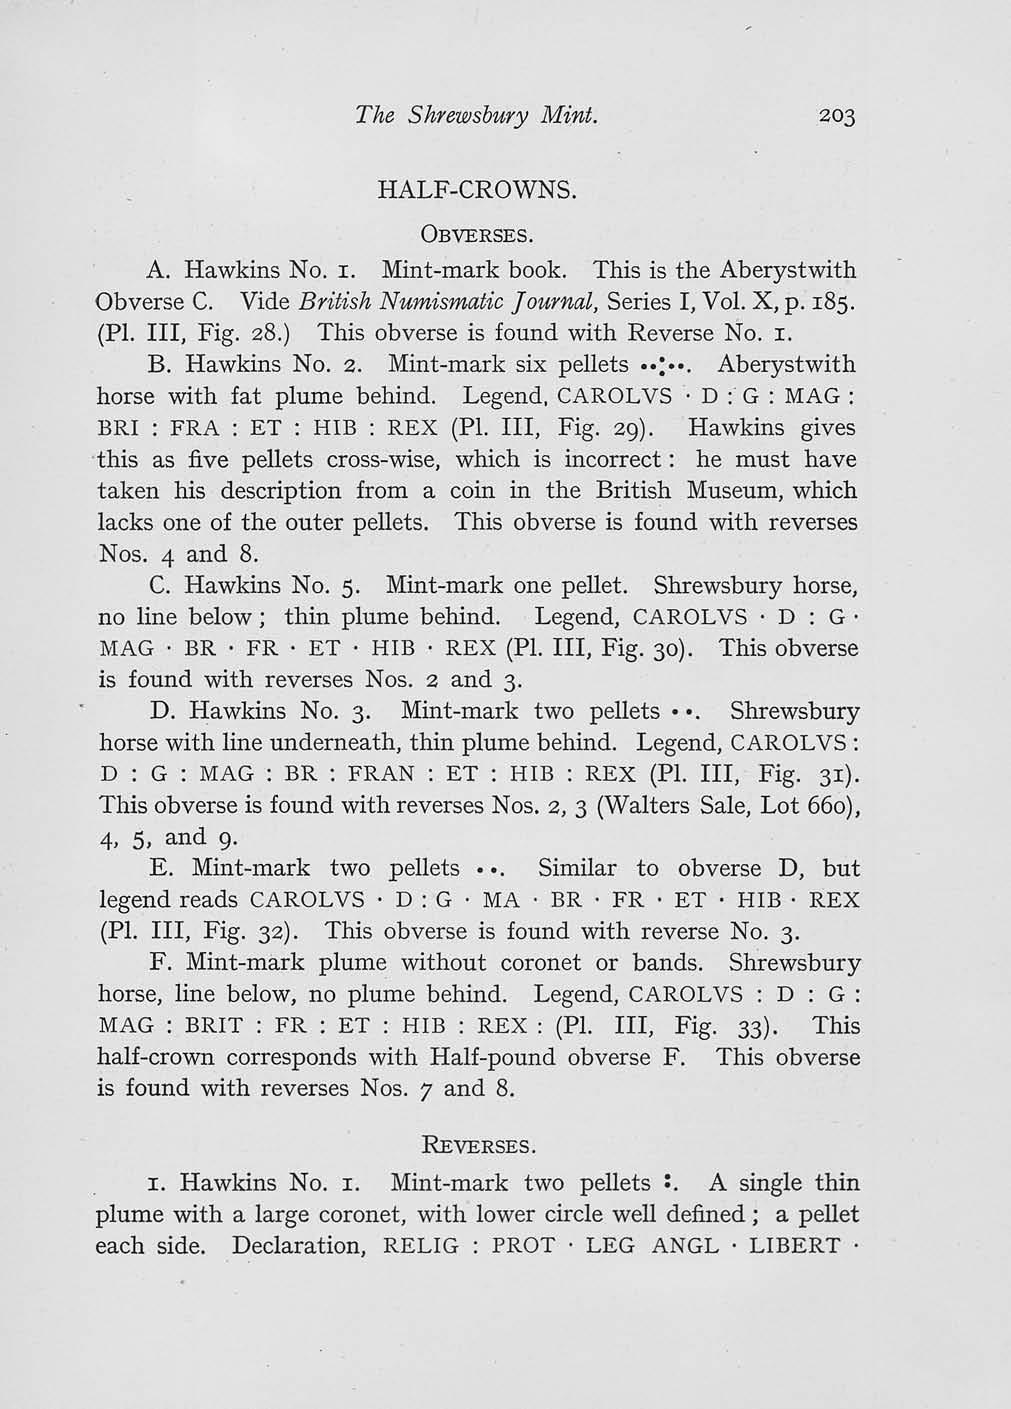 The Shrewsbury Mint. HALF-CROWNS. OBVERSES. A. Hawkins No. 1. Mint-mark book. This is the Aberystwith Obverse C. Vide British Numismatic Journal, Series I, Vol. X, p. 185. (Pl. Ill, Fig. 28.